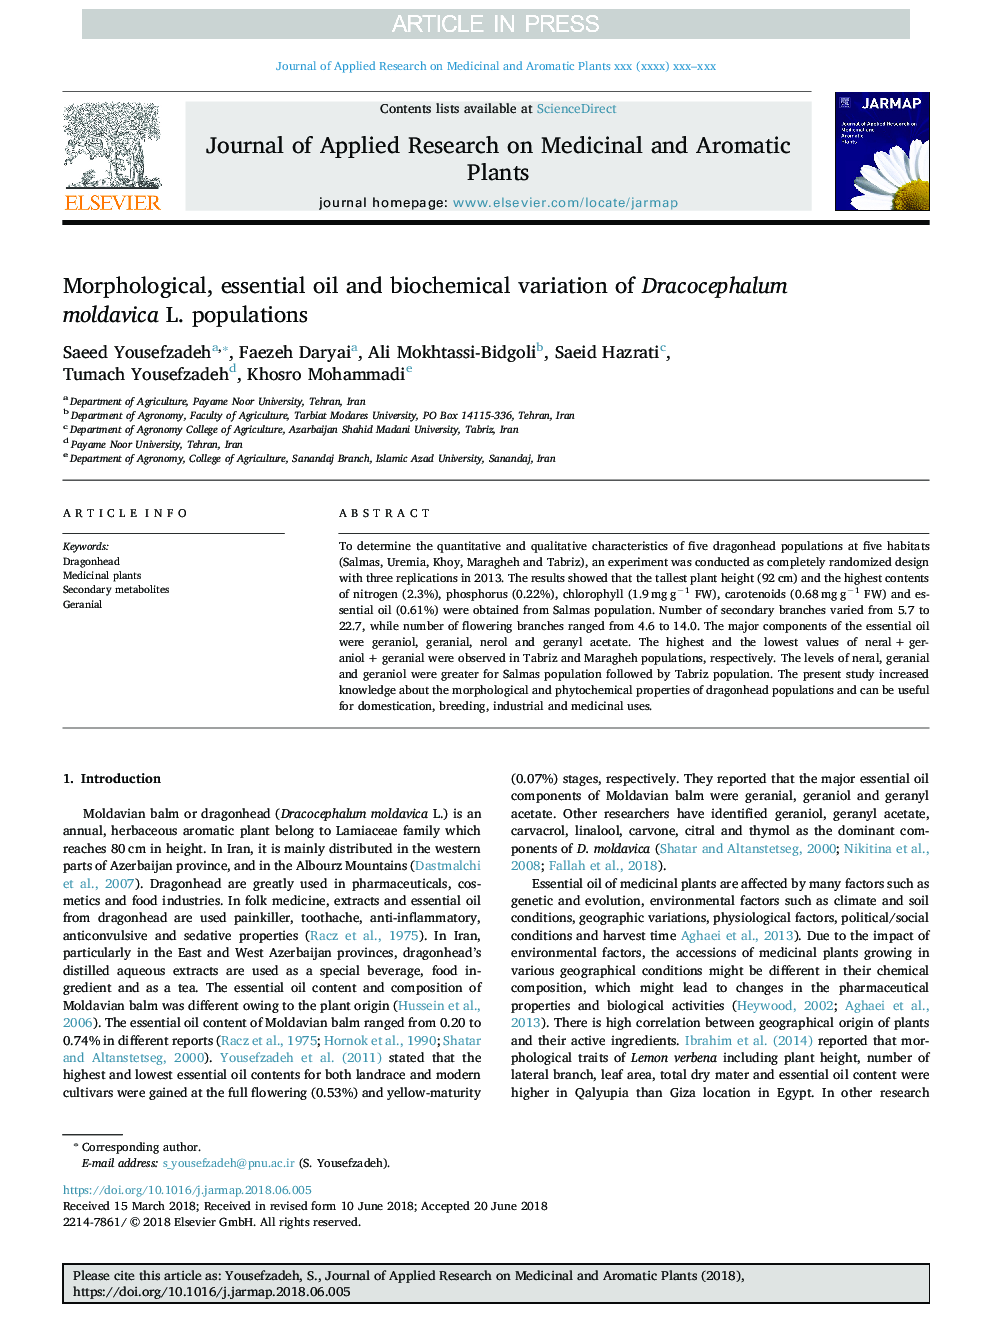 Morphological, essential oil and biochemical variation of Dracocephalum moldavica L. populations